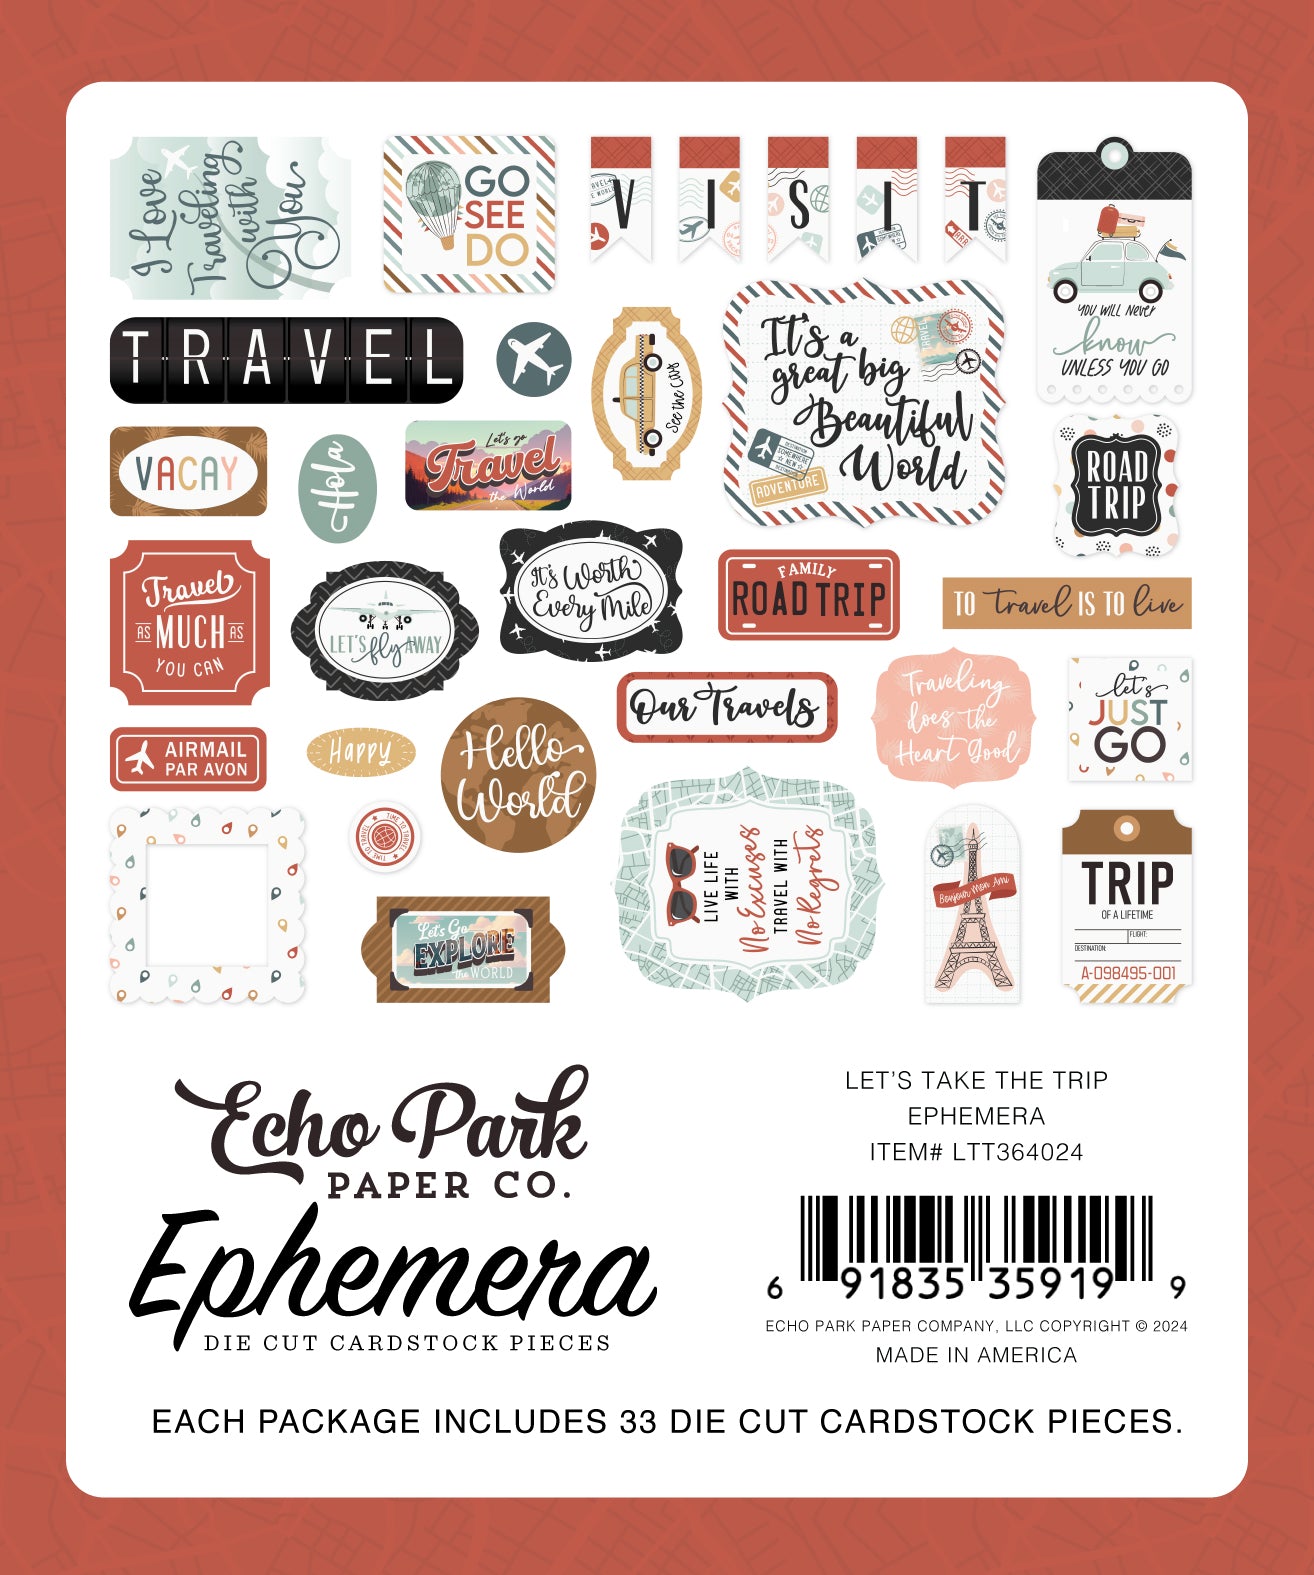 Let's Take the Trip Collection 5x5 Scrapbook Ephemera by Echo Park Paper